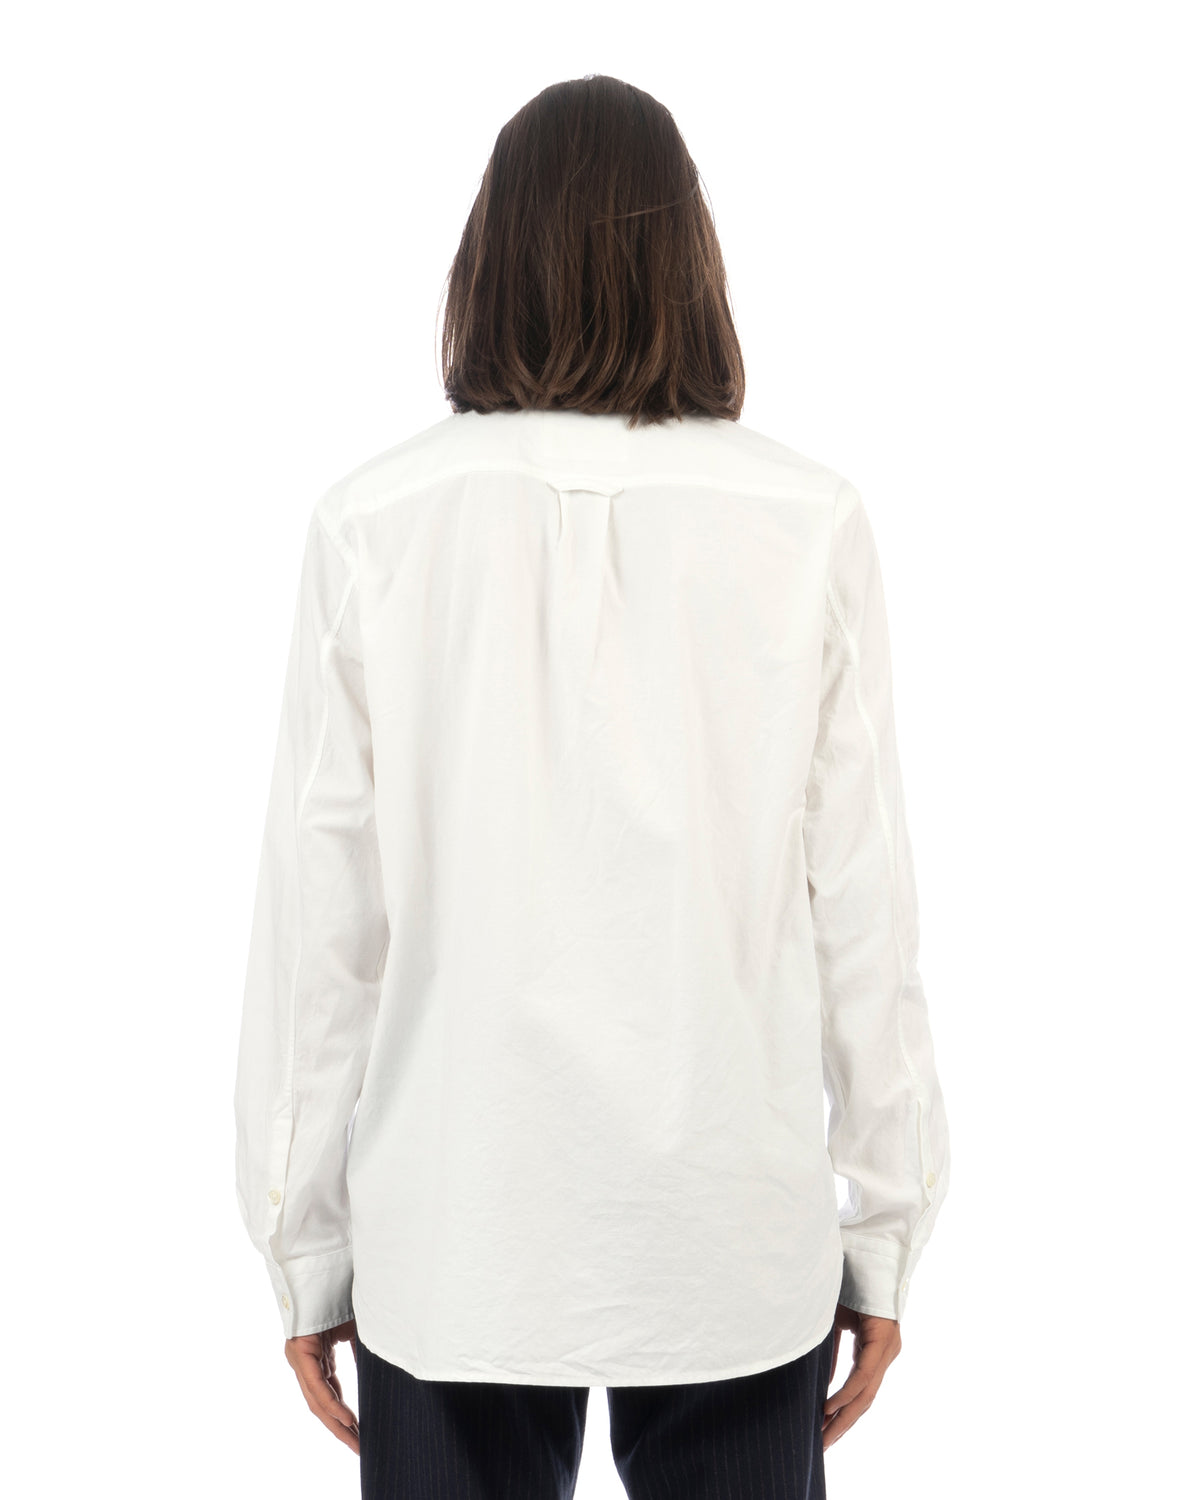 Hansen | 'Ante' Collarless Shirt White - Concrete